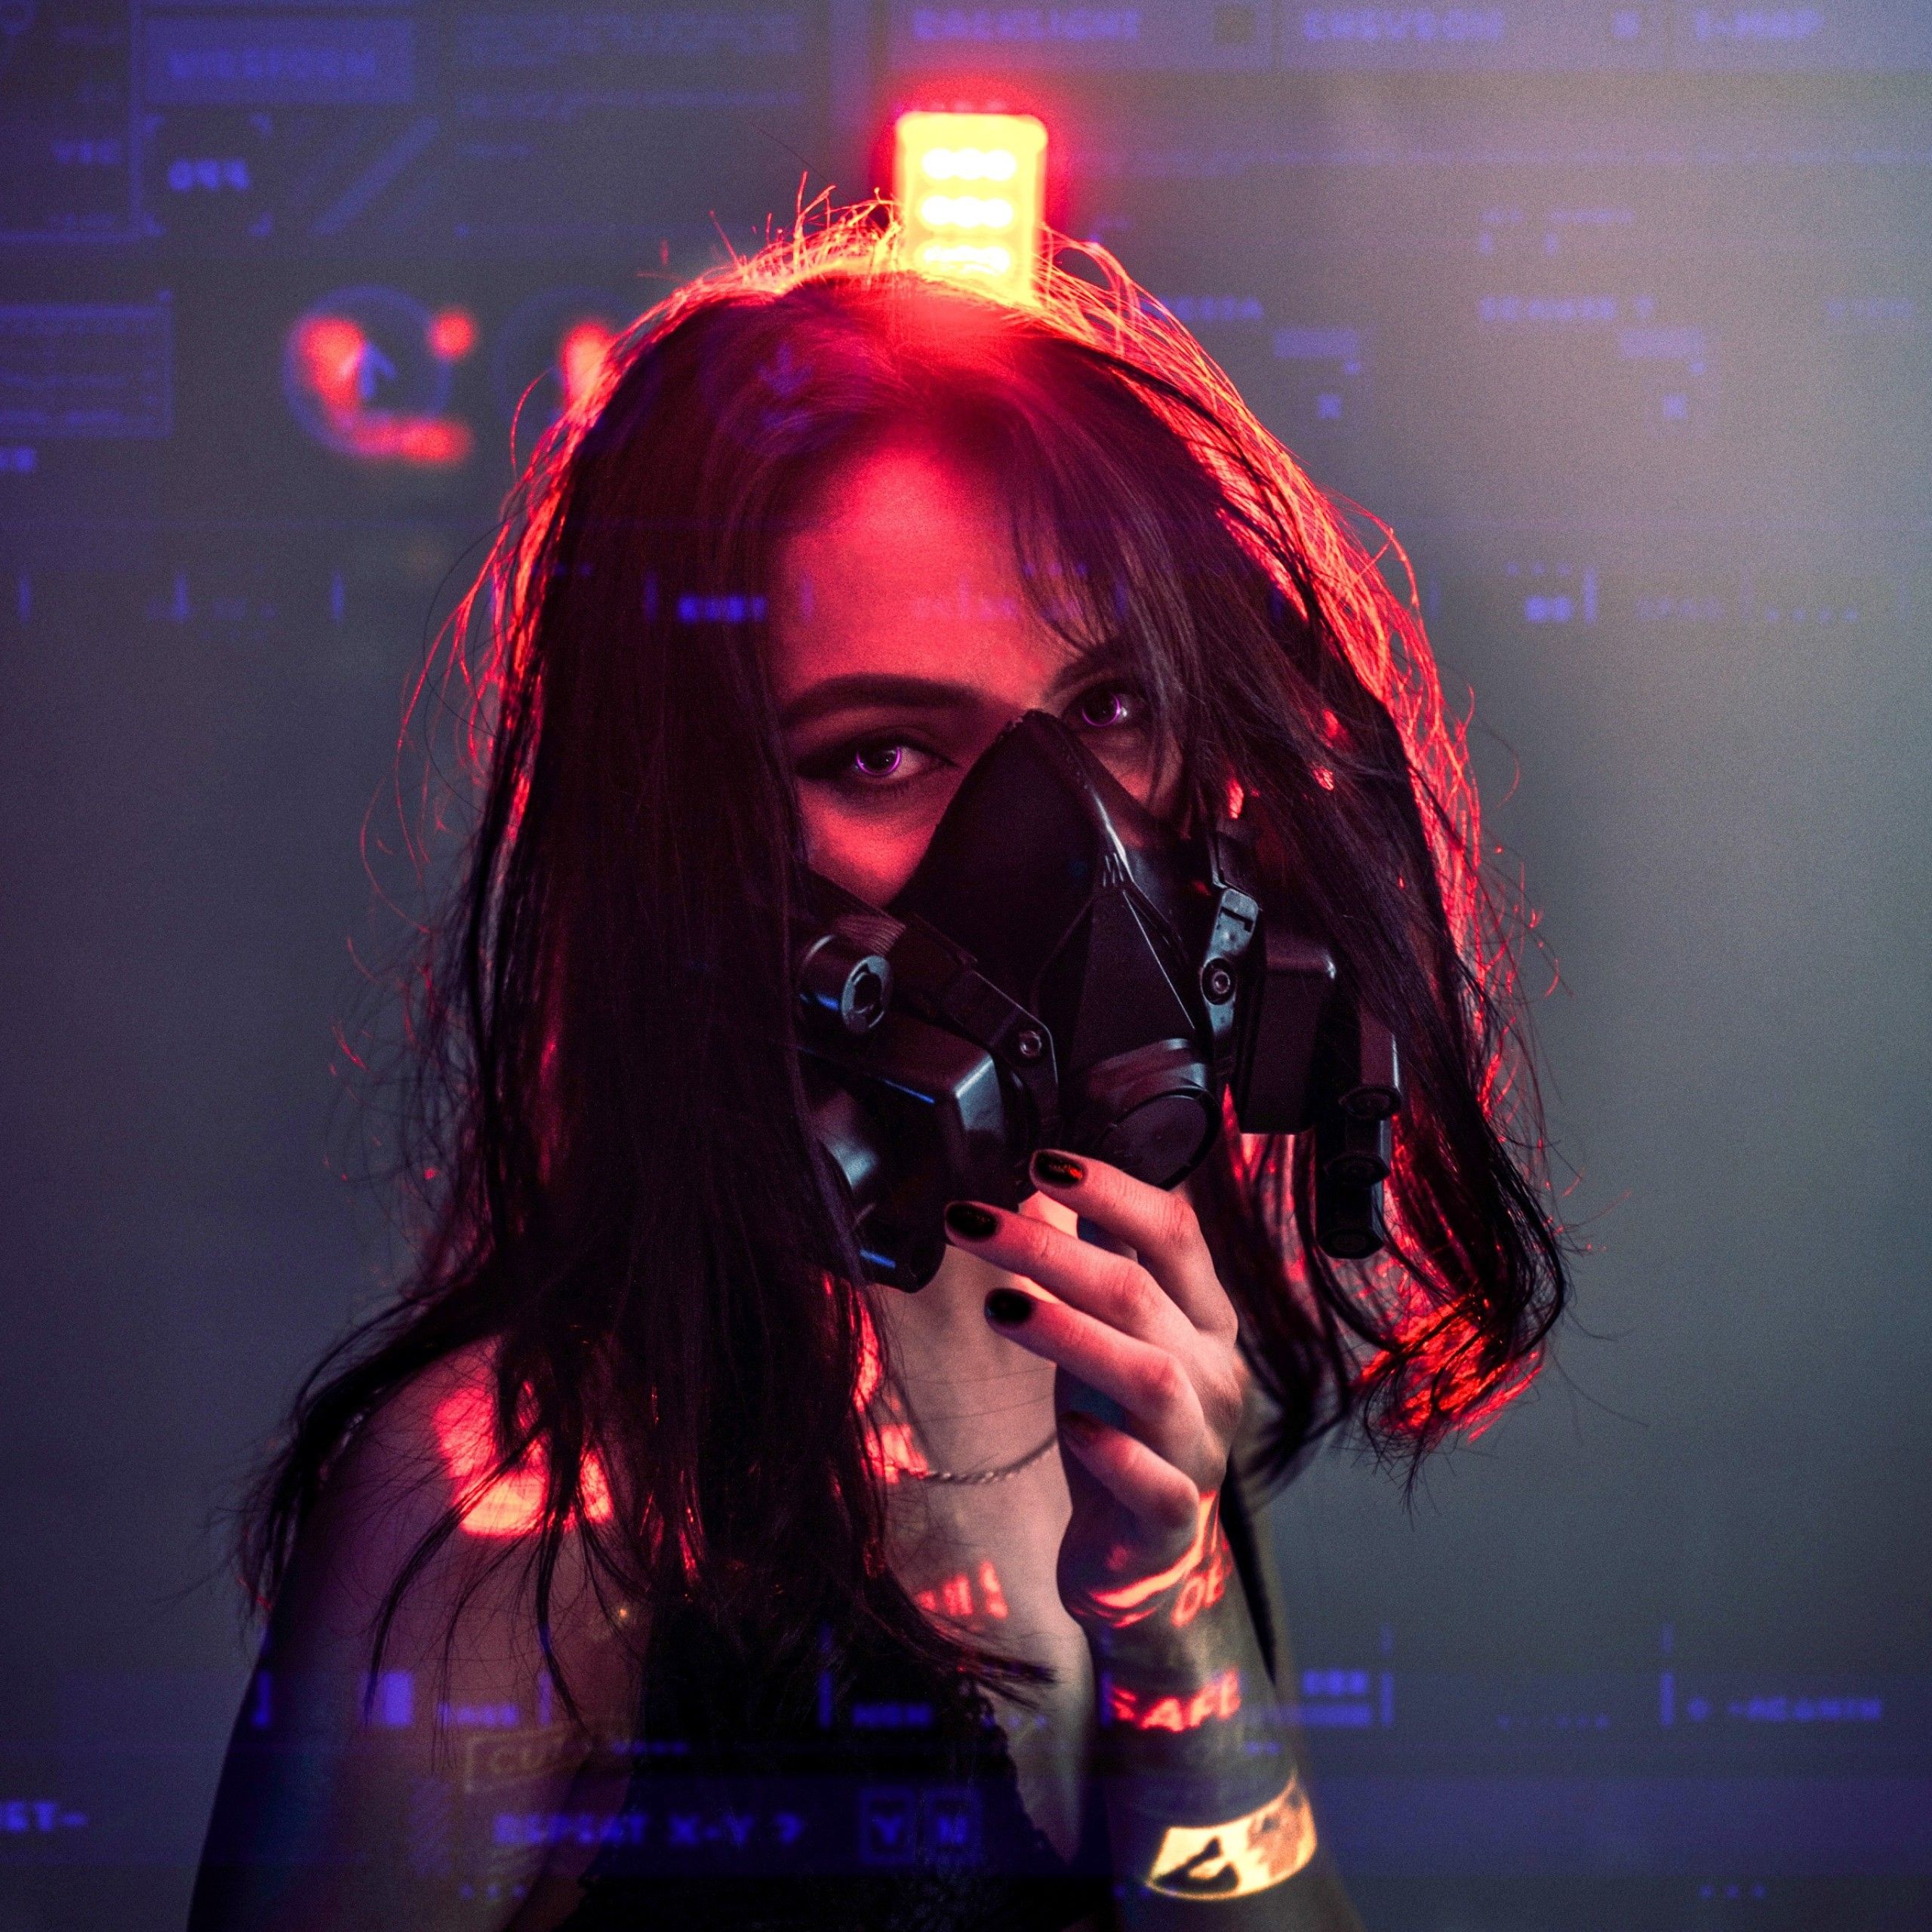 Sci Fi 4K Wallpaper, Cyberpunk Girl, Gas Mask, Teen Girl, People